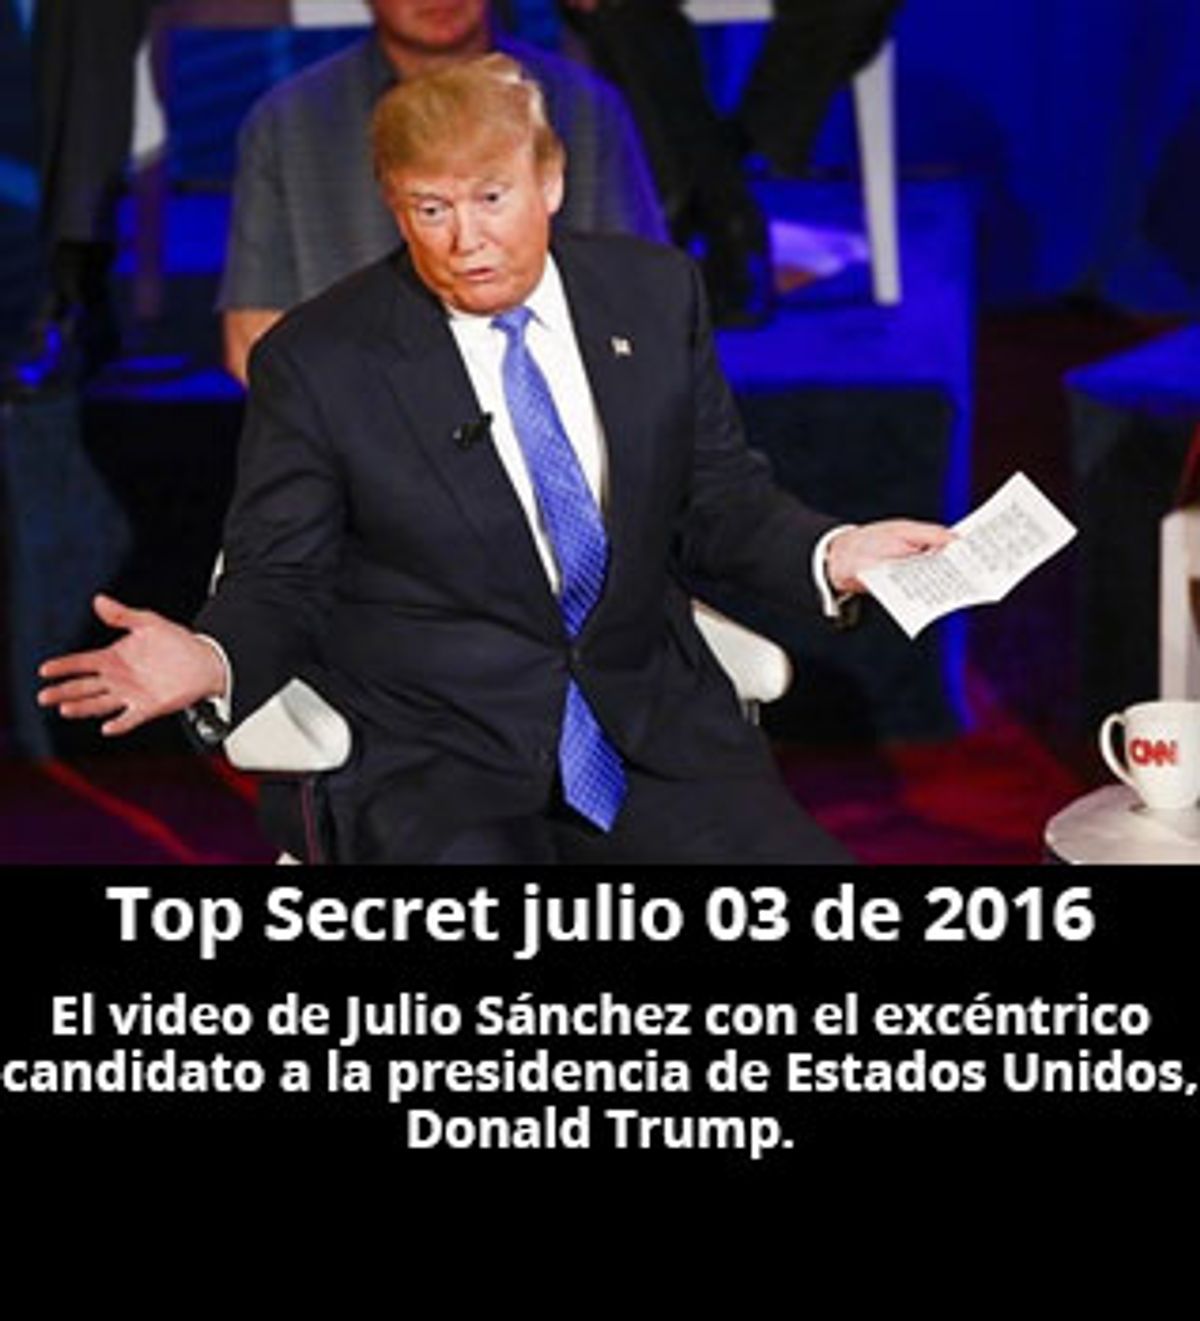 Top Secret julio 03 de 2016